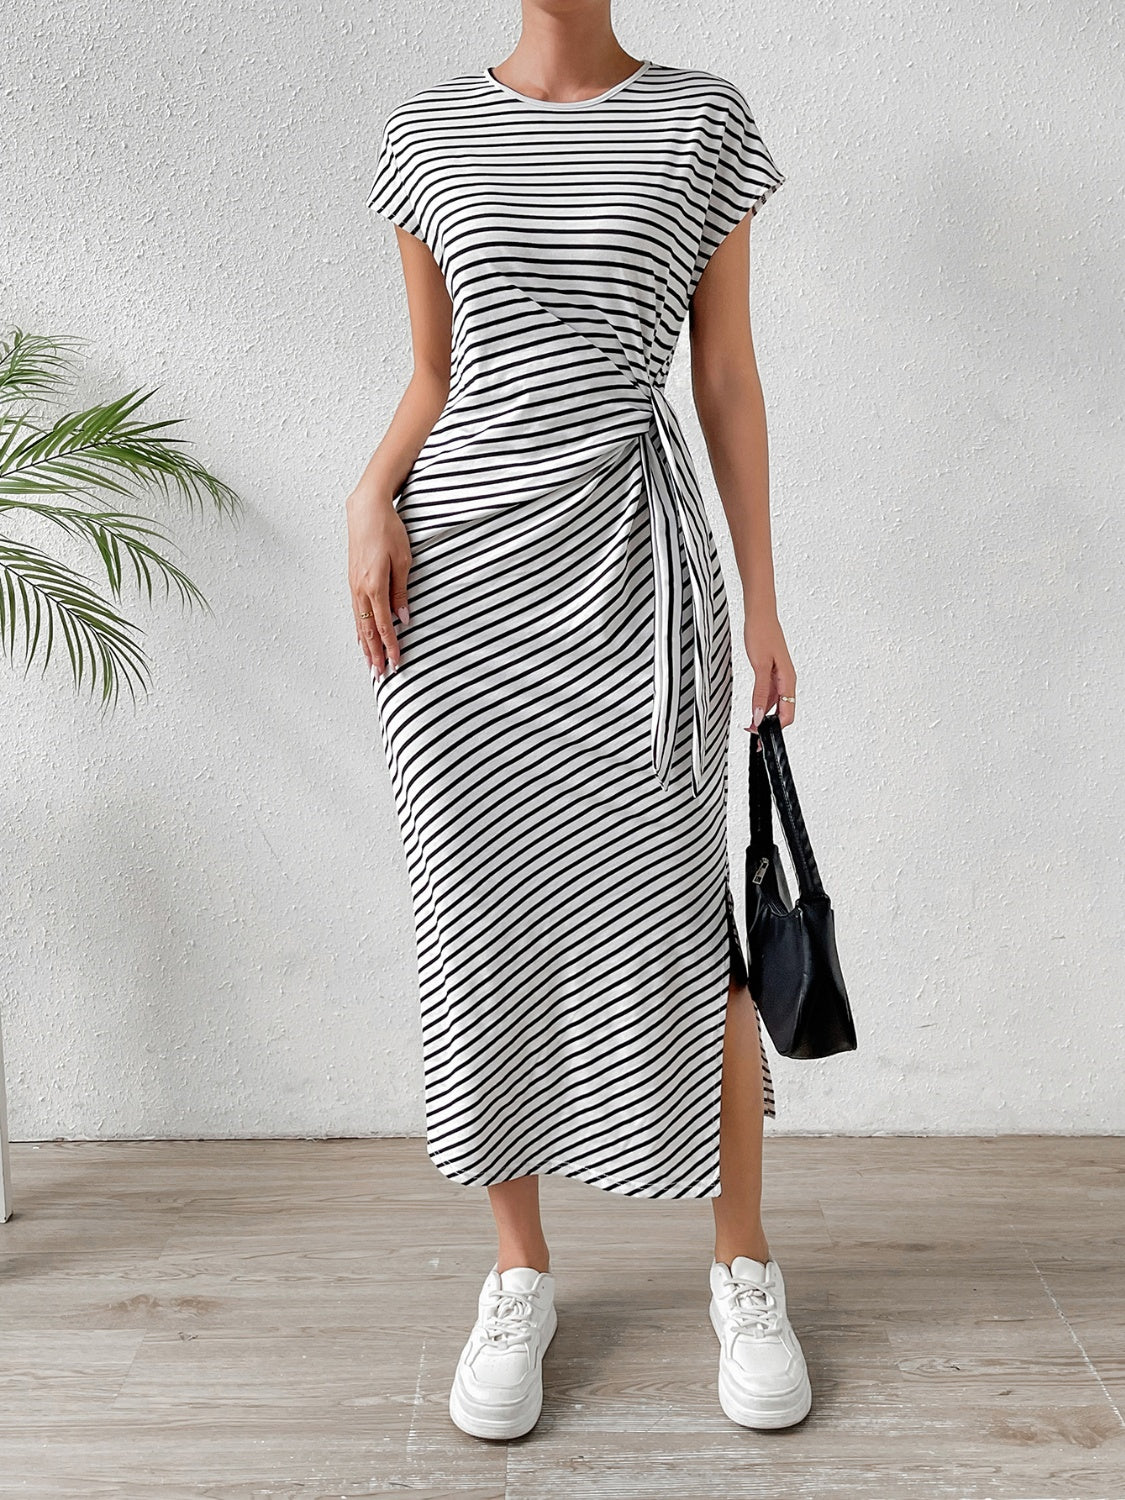 TEEK - Tied Striped Round Neck Short Sleeve Tee Dress DRESS TEEK Trend   